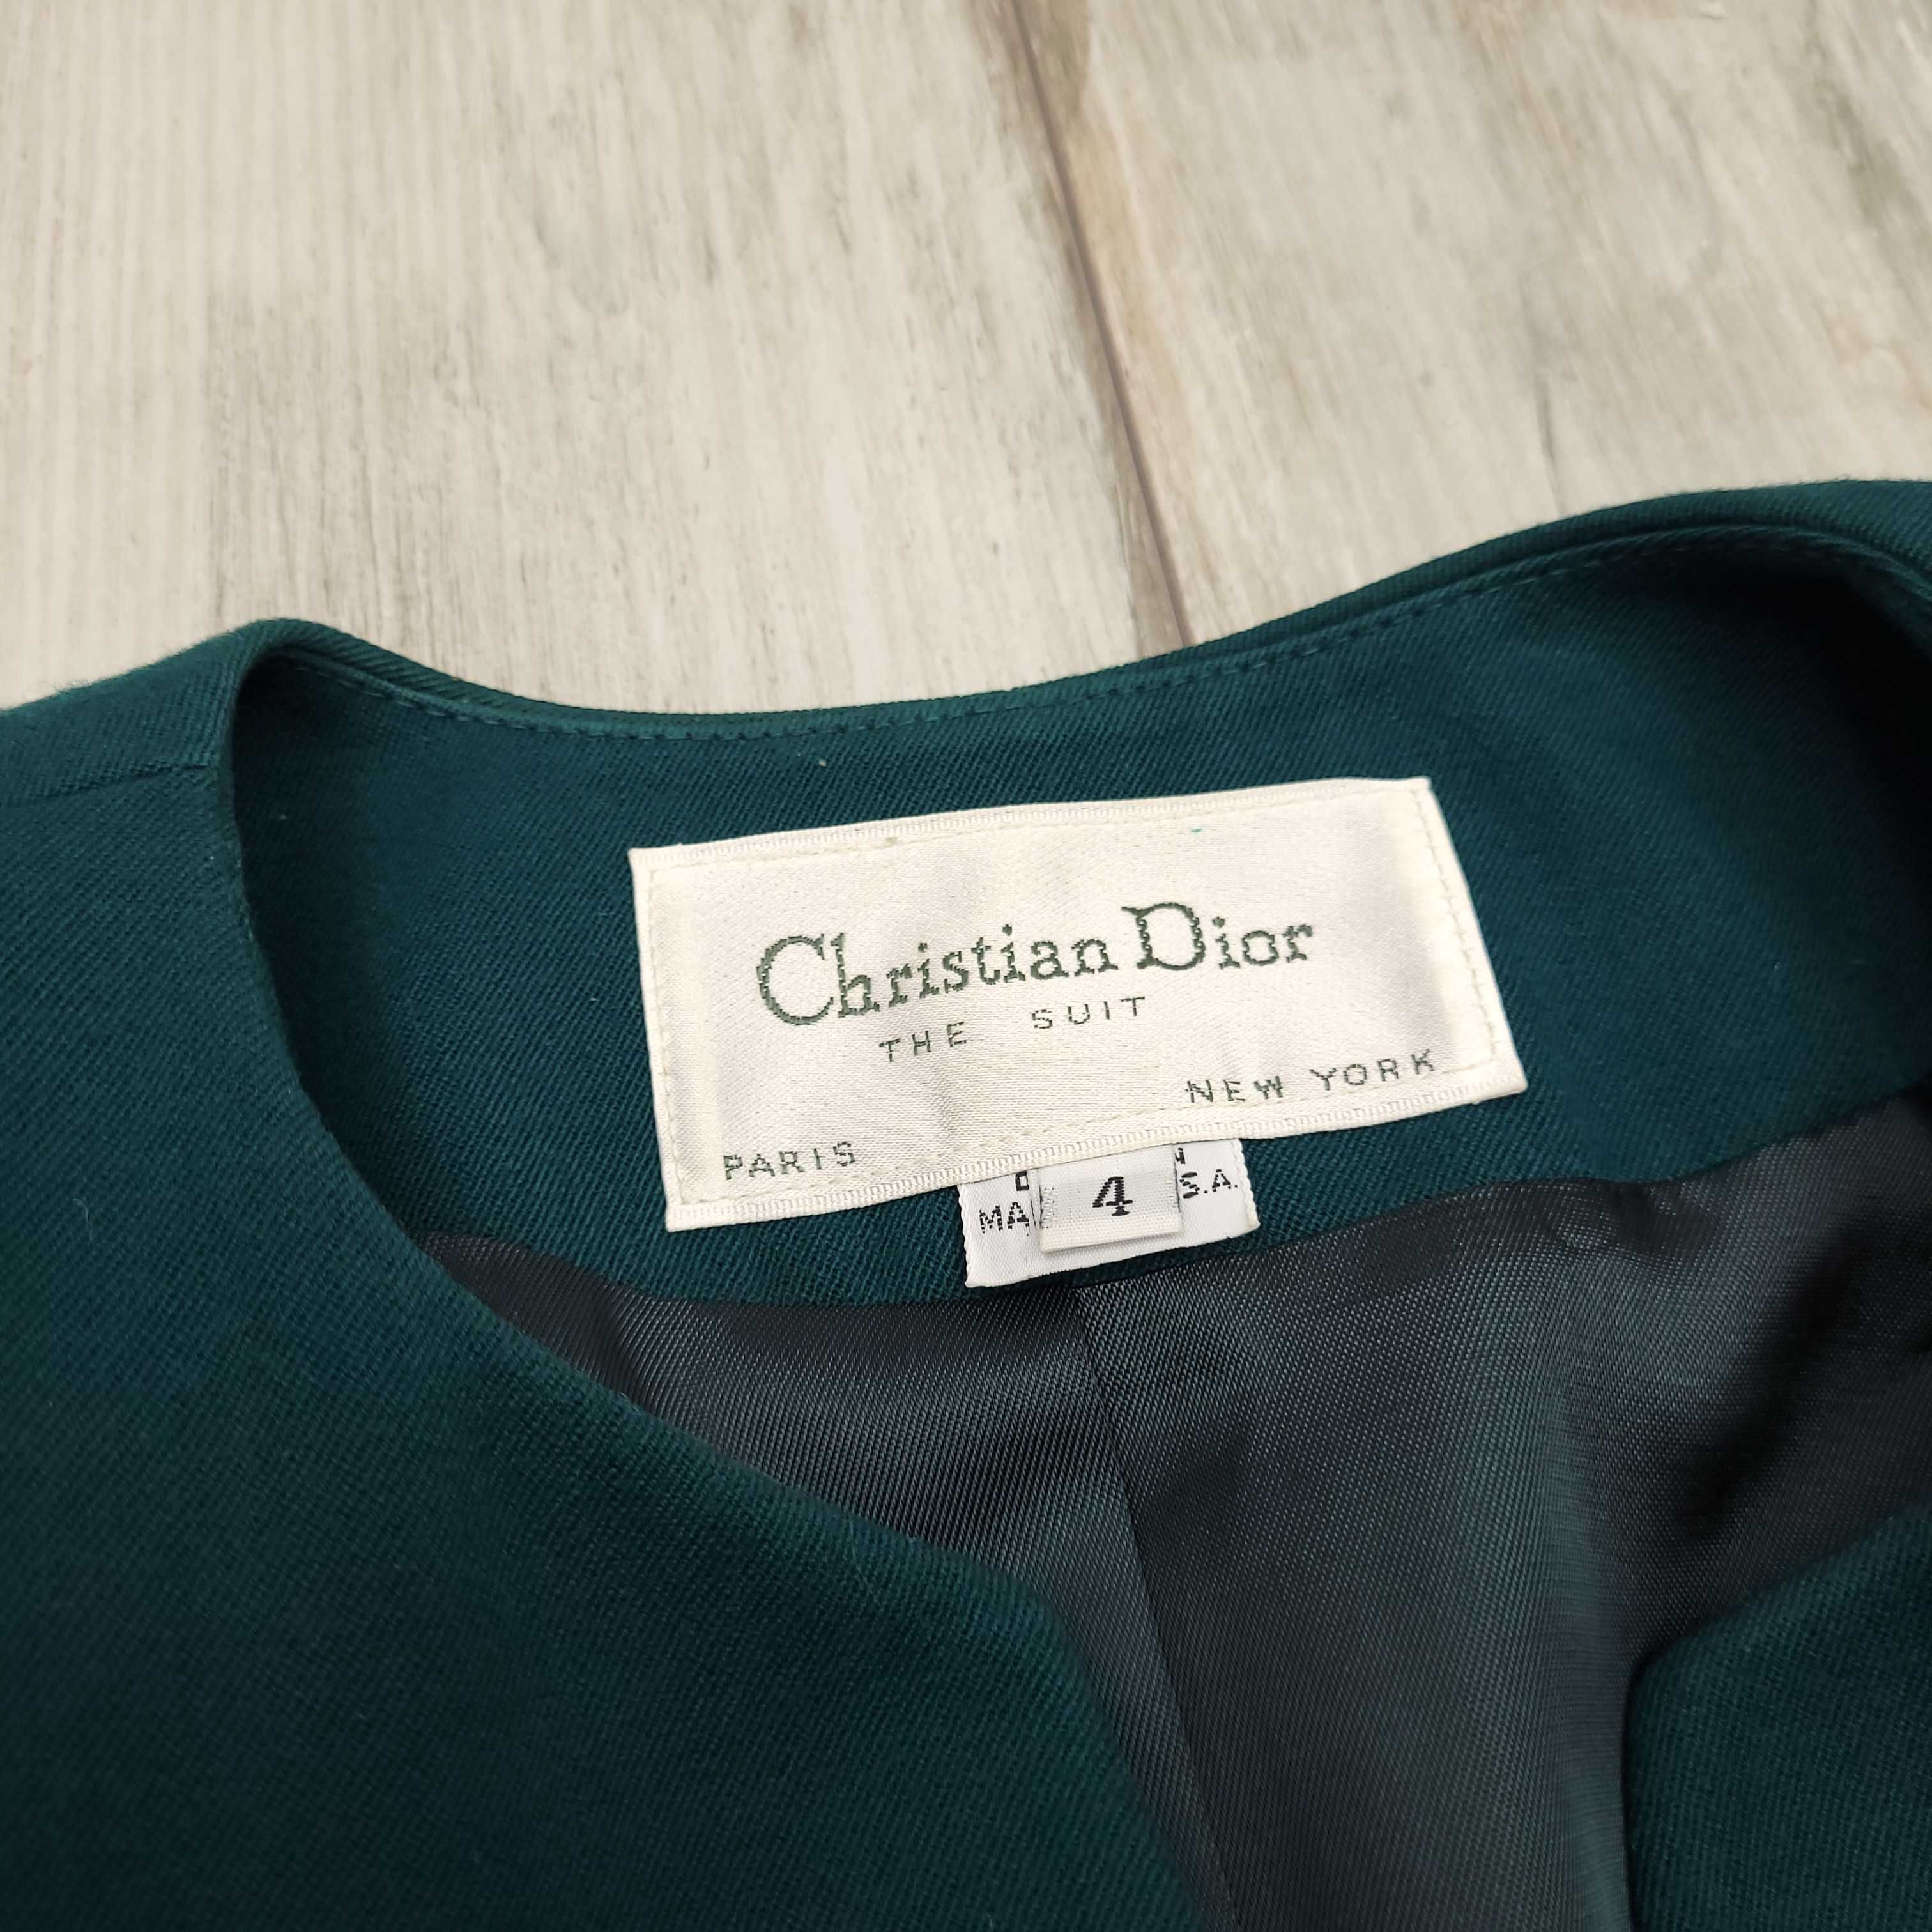 Christian Dior 1980 Vintage Blazer High End marynarka żakiet damski